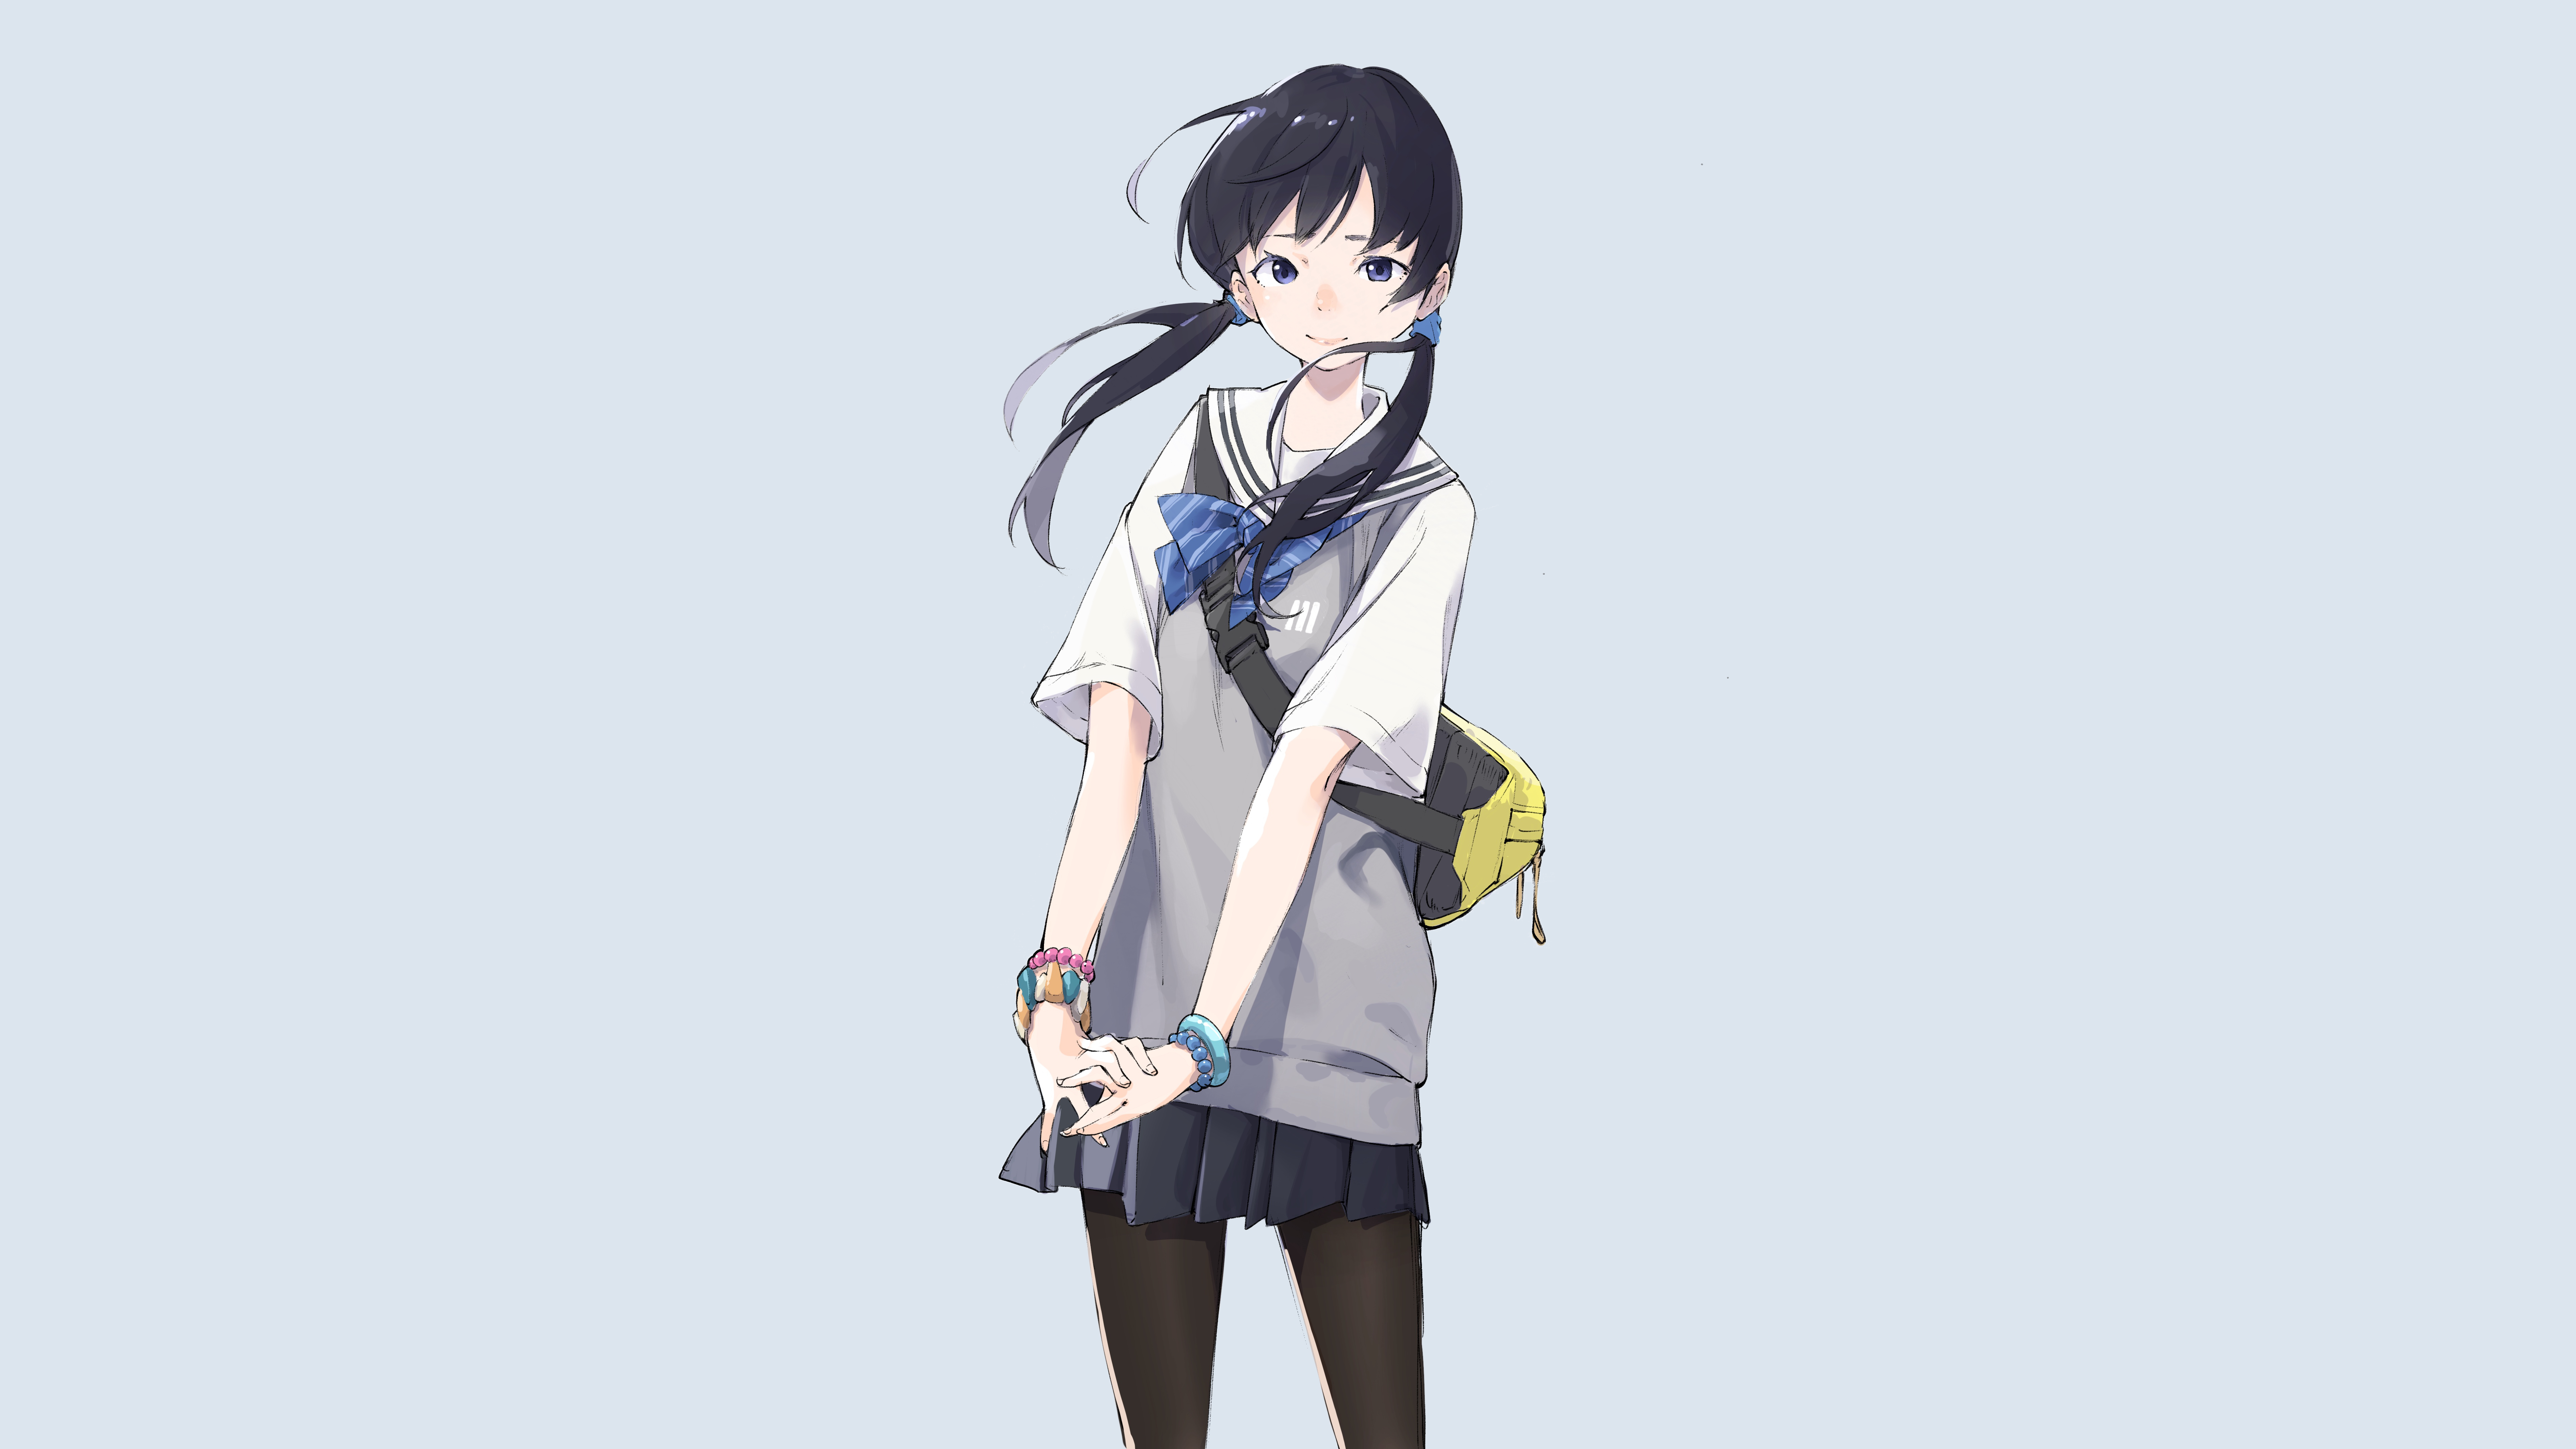 Anime Girls Anime Simple Background Popman3580 Smiling Schoolgirl School Uniform Original Characters 7607x4279